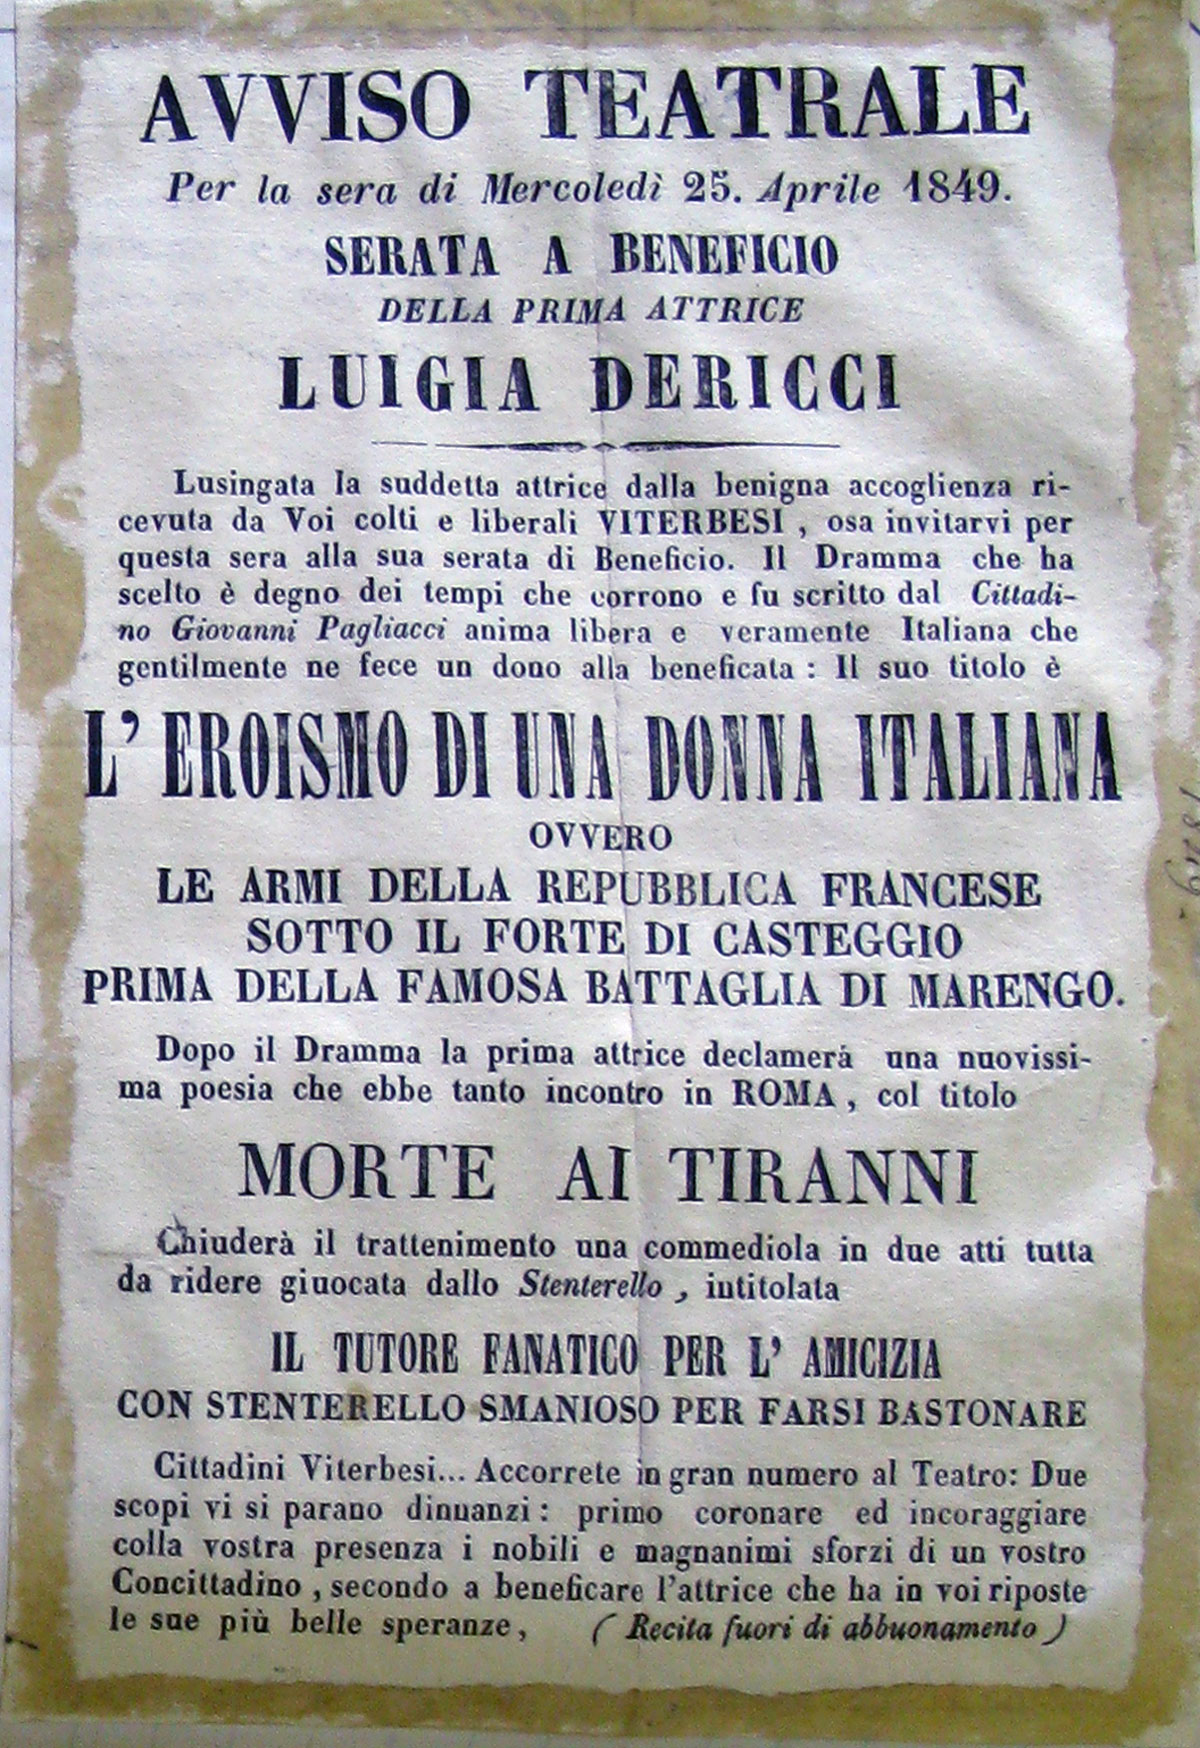 Viterbo, 1849. Teatro del Genio, beneficiata per Luigia Dericci. Fig. 2